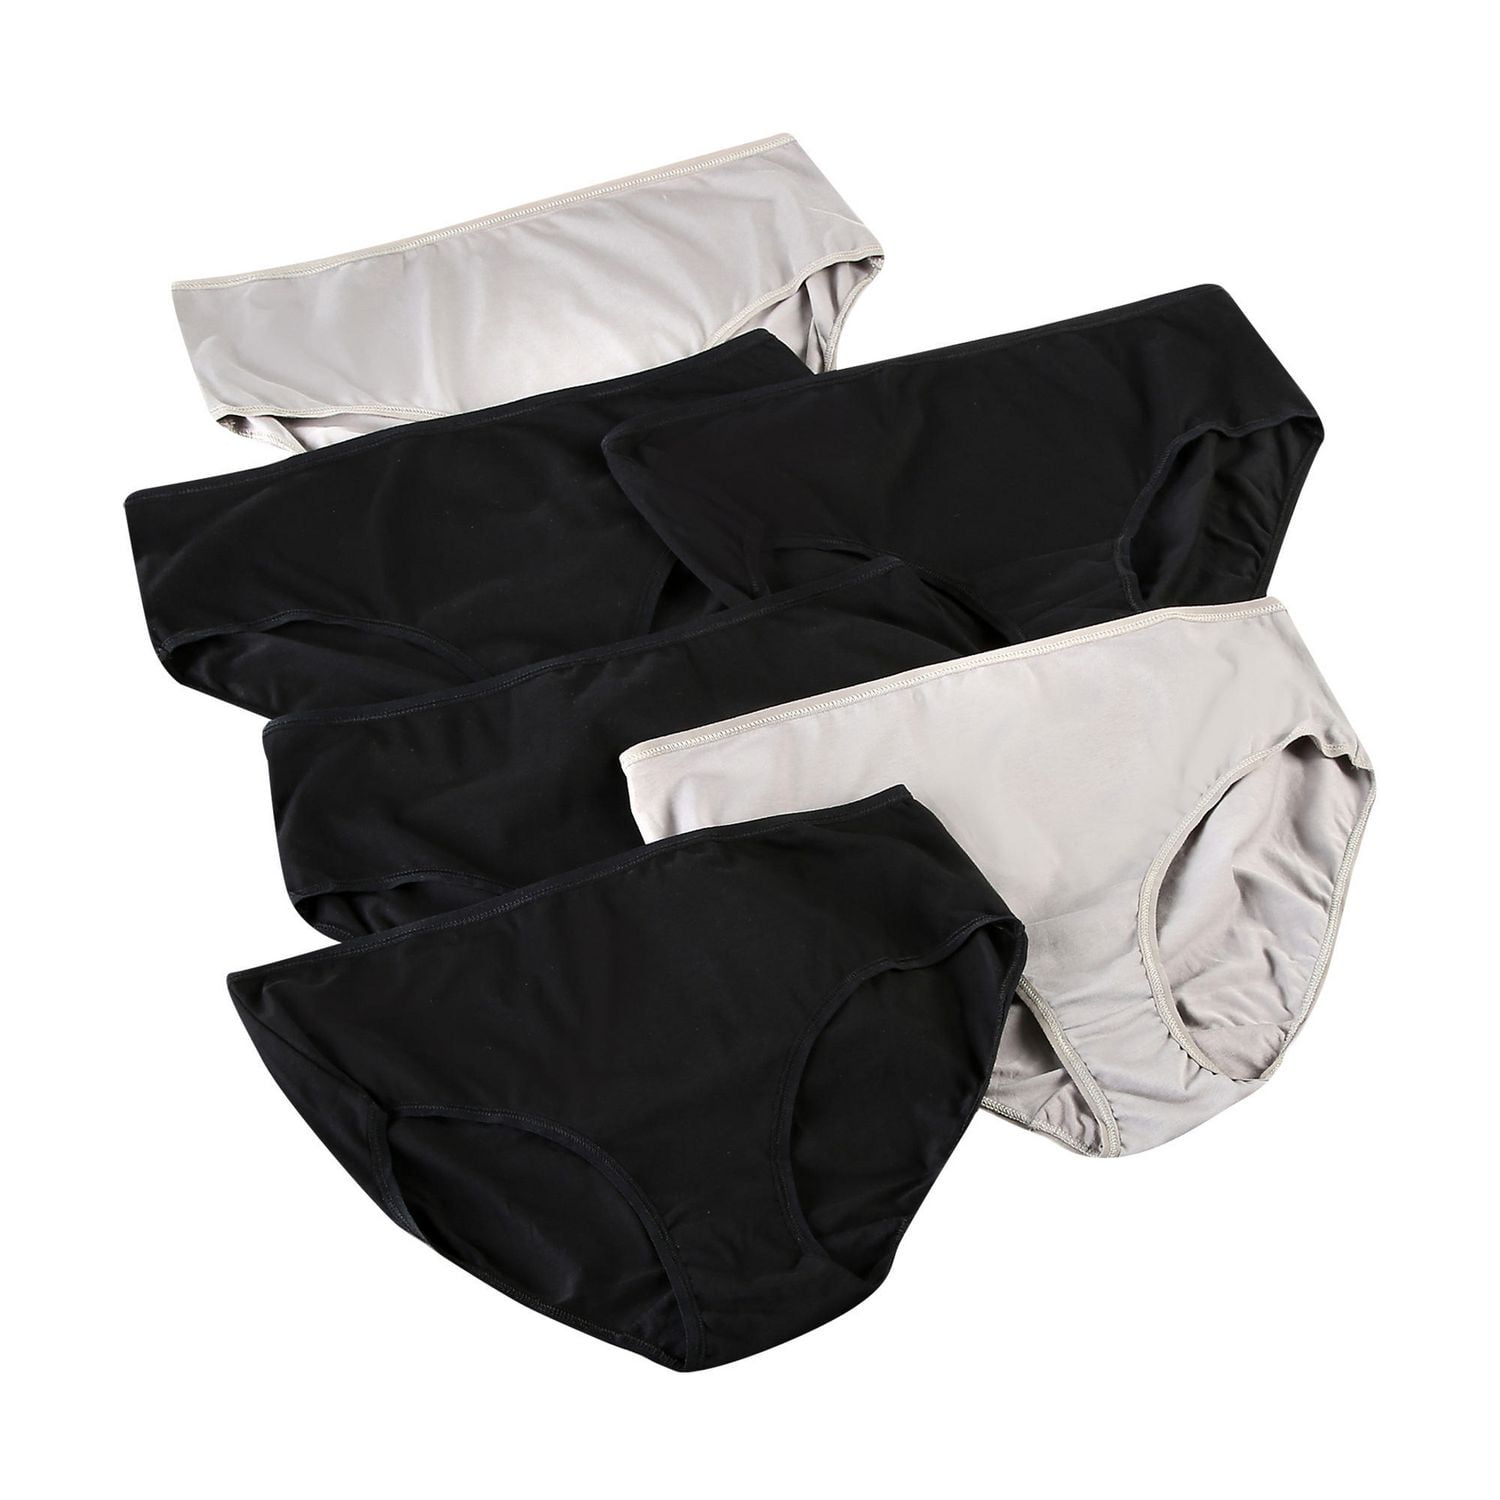 Buy Mercury Finest Combined Cotton Underwear Online at Best Price